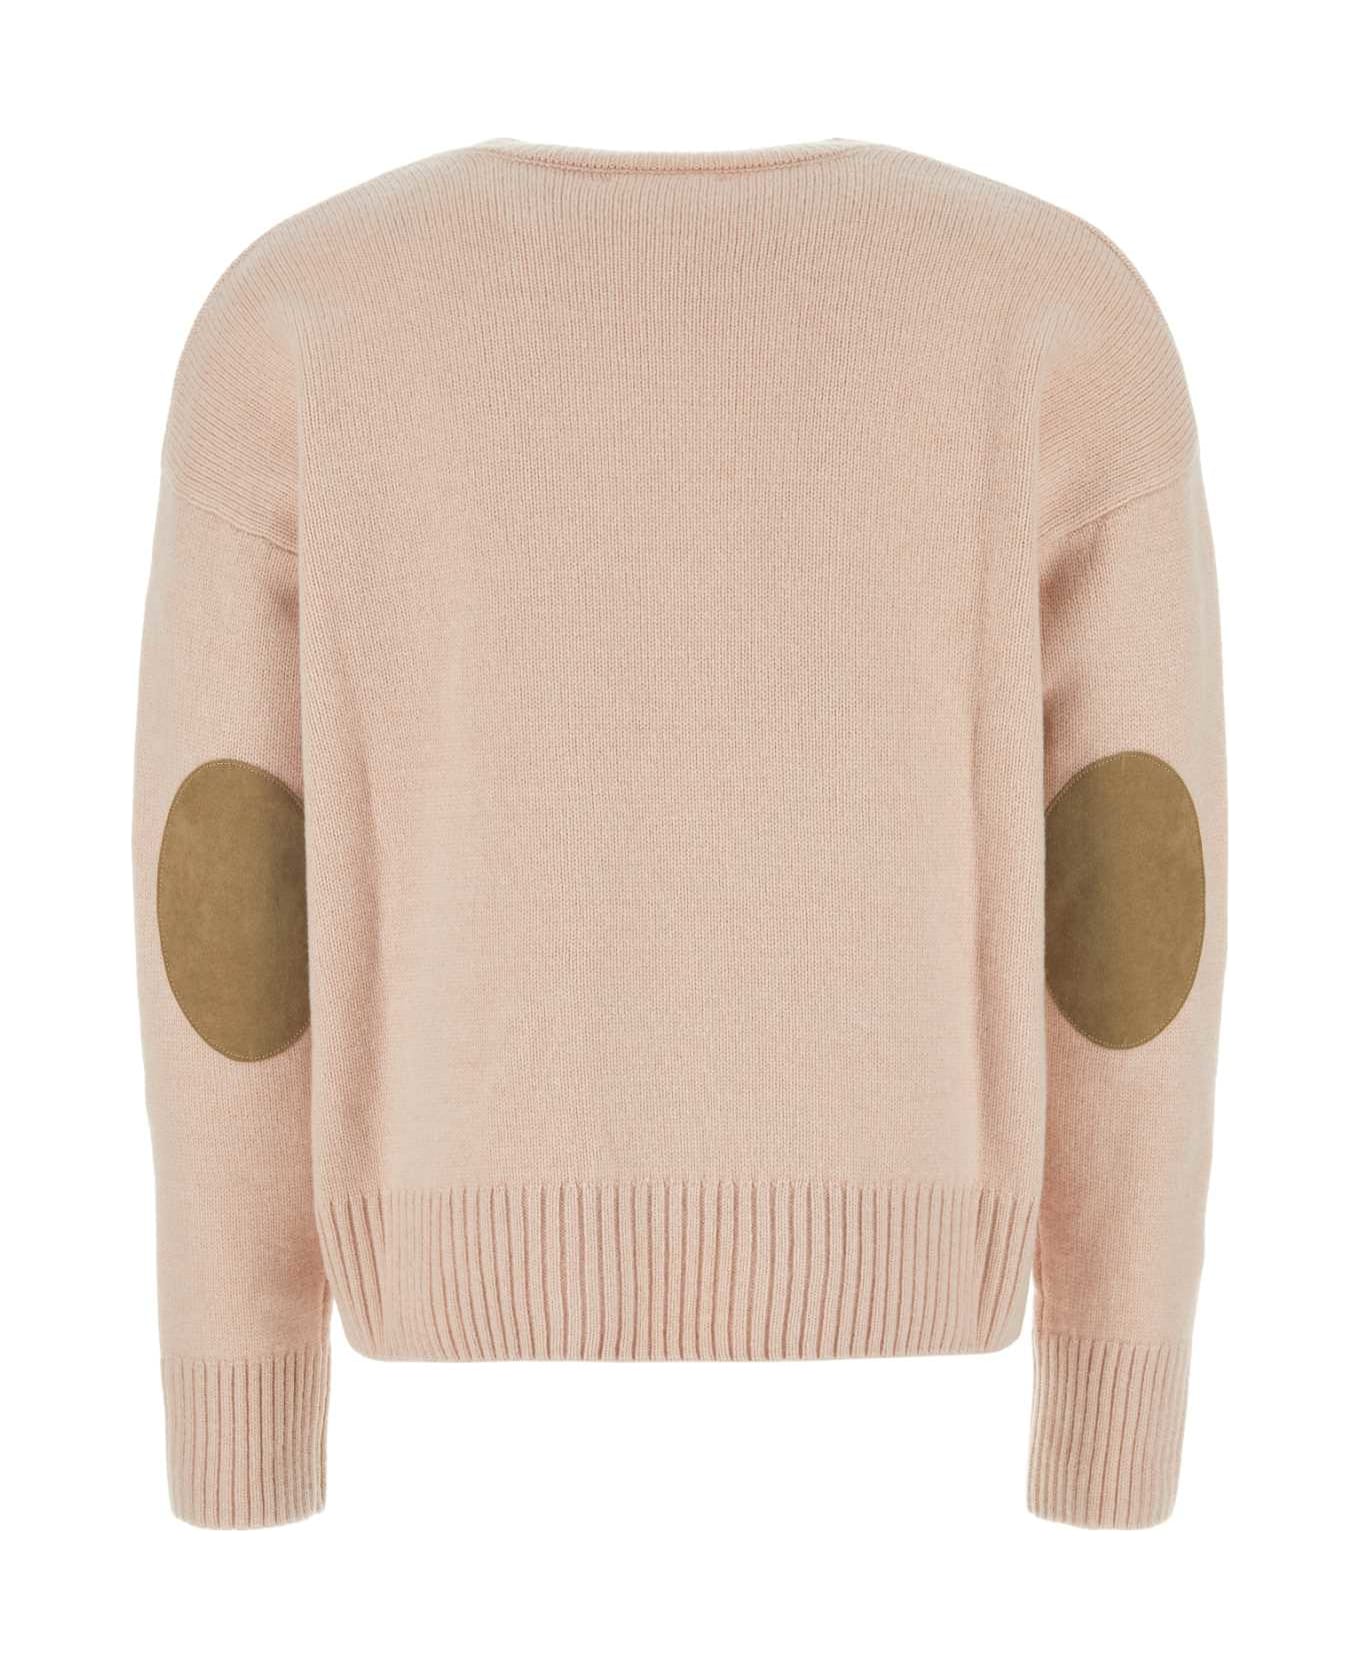 Ami Alexandre Mattiussi Antiqued Pink Wool Blend Sweater - POWDERPINK